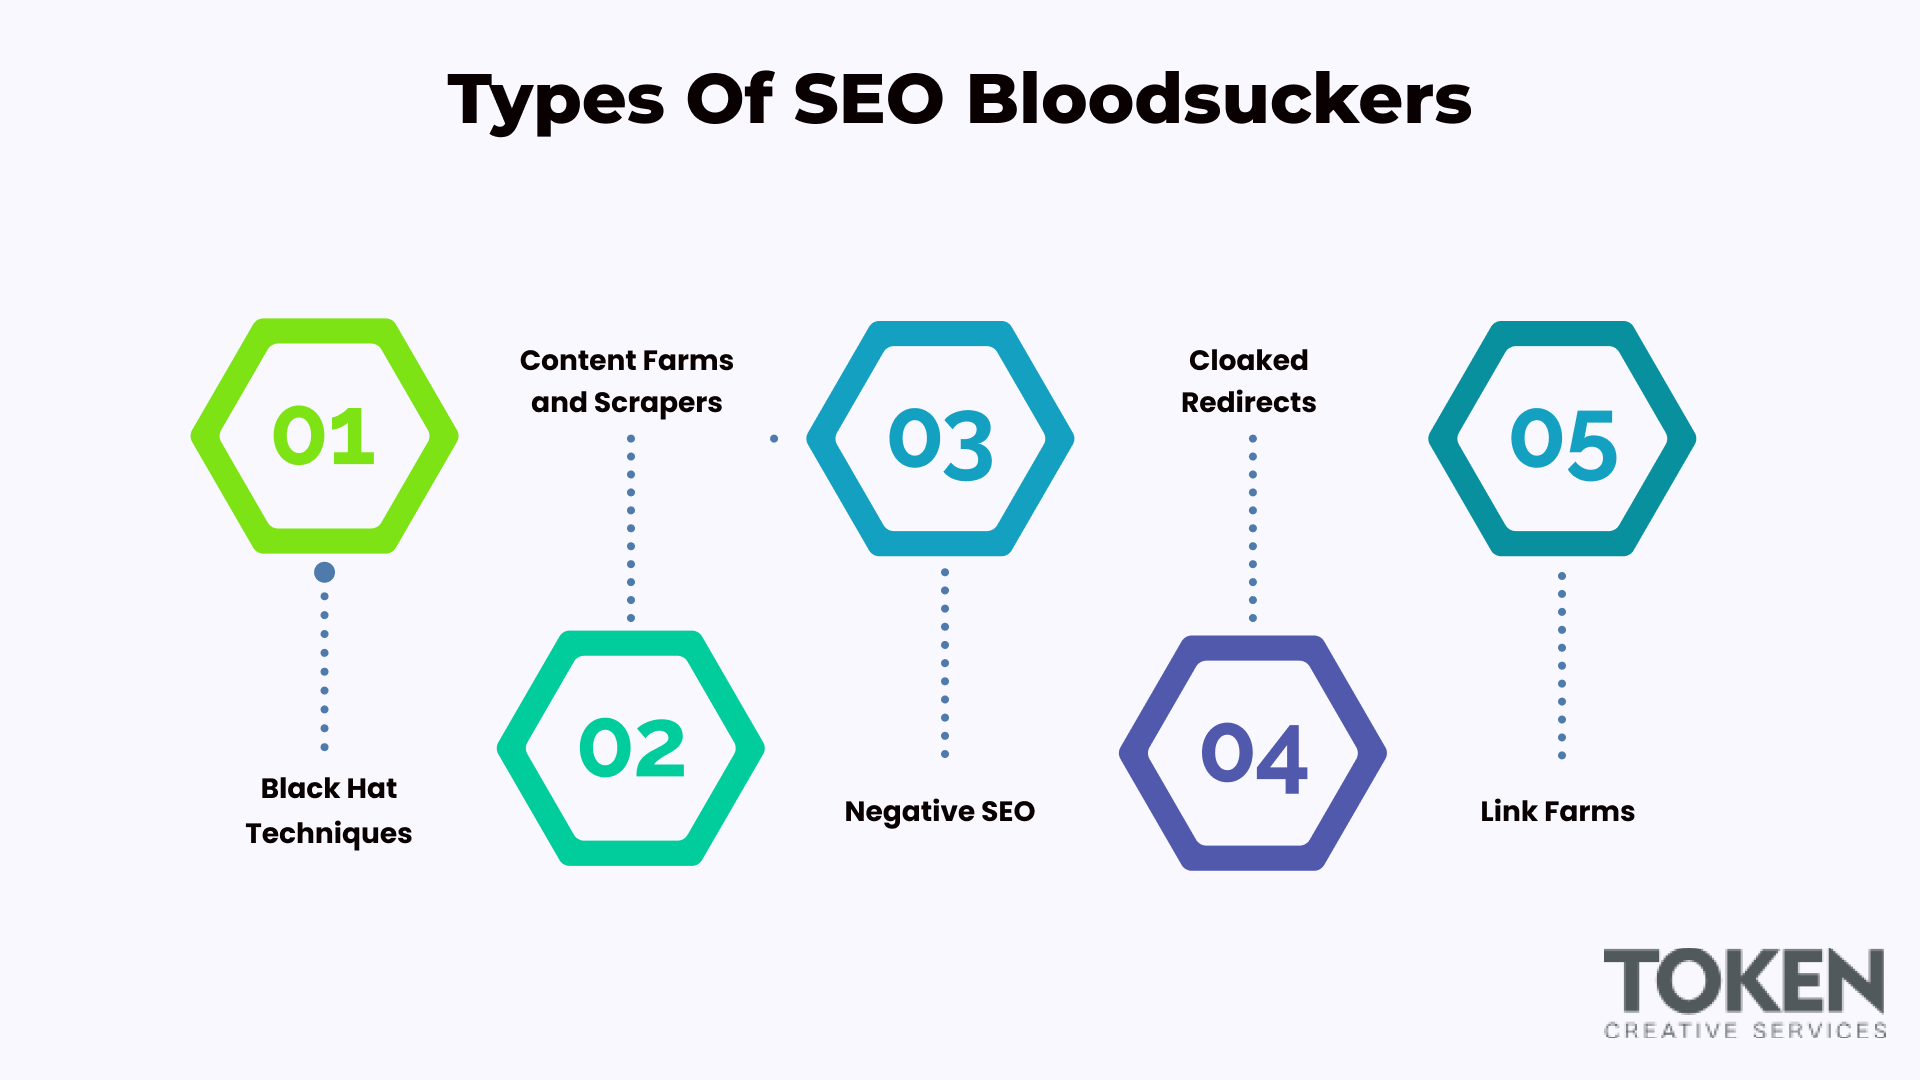 Types of SEO Bloodsuckers